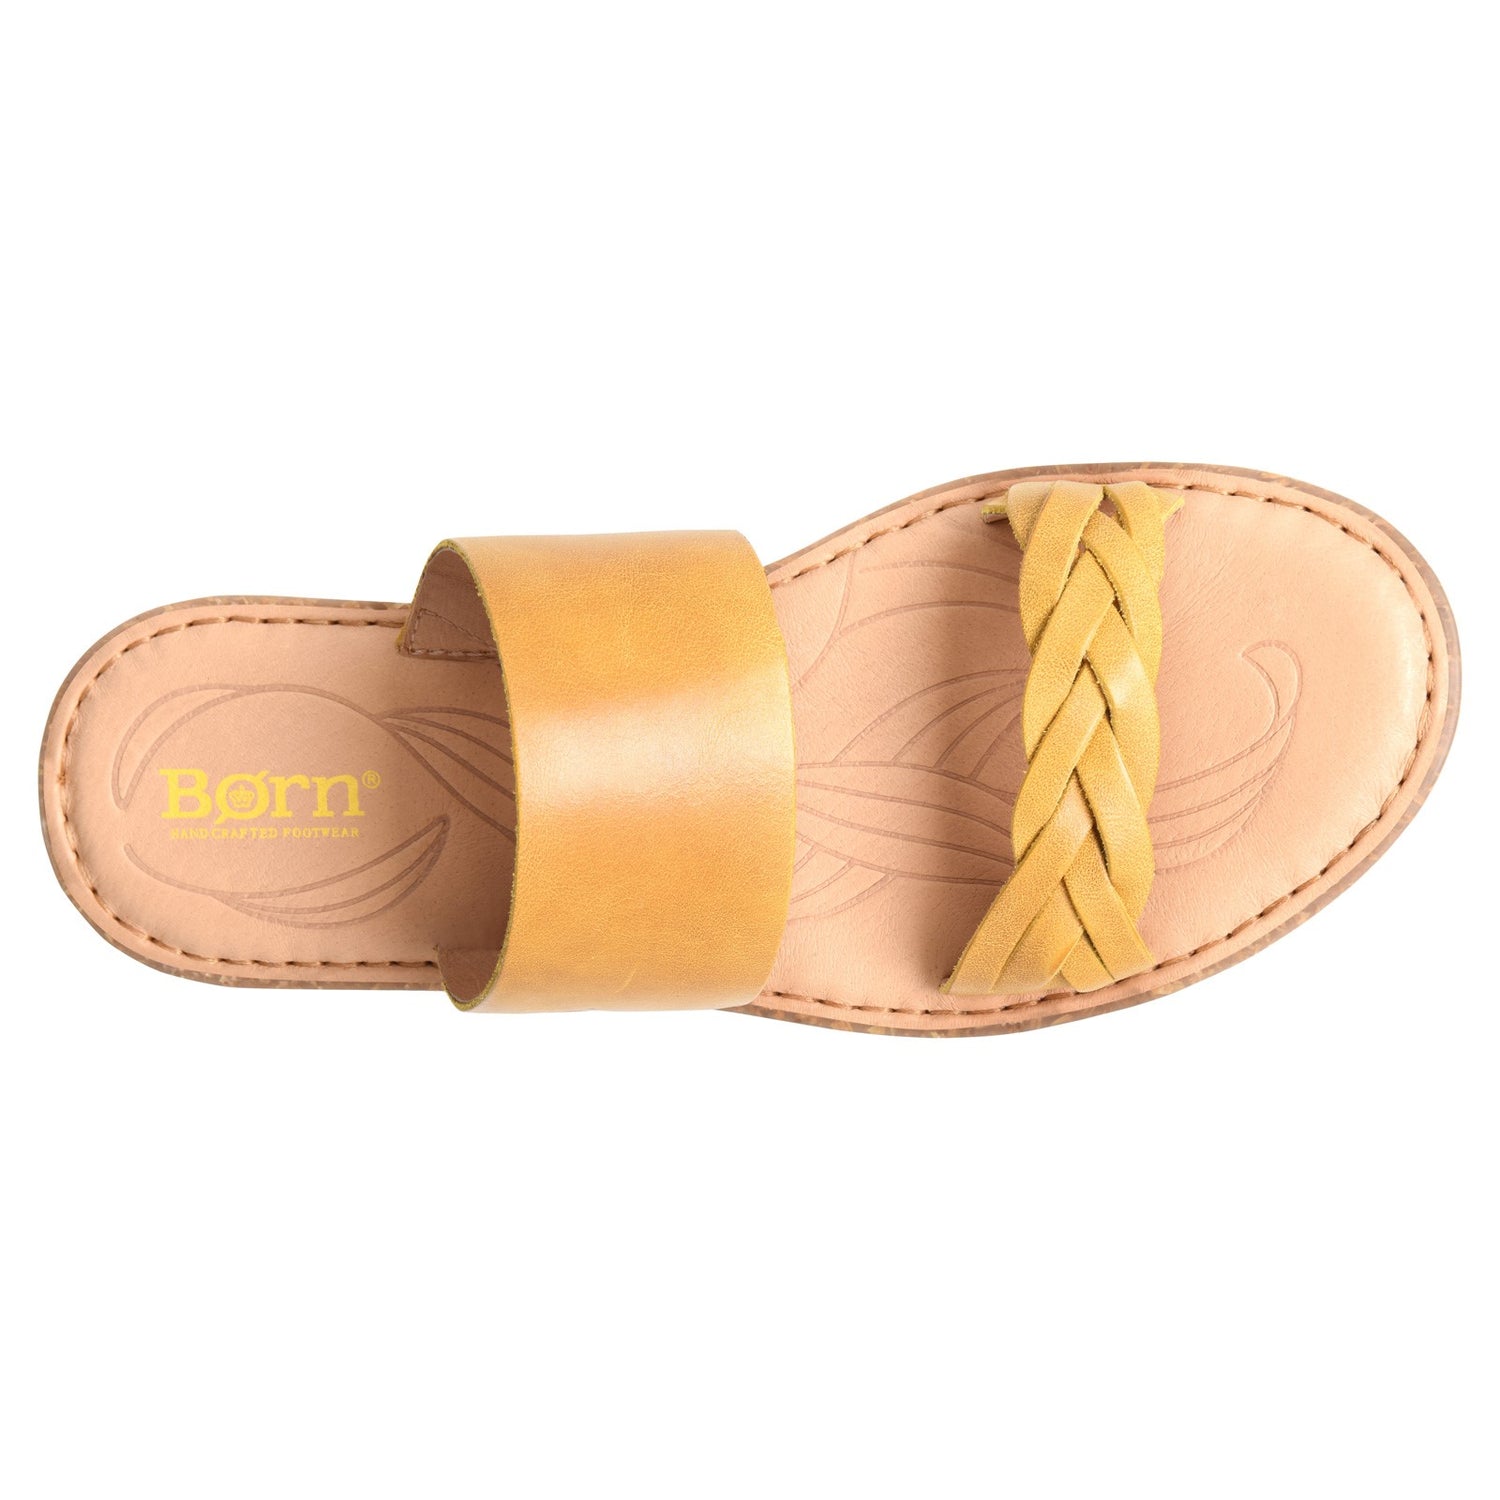 Peltz Shoes  Women's Born Morena Sandal Yellow BR0033907